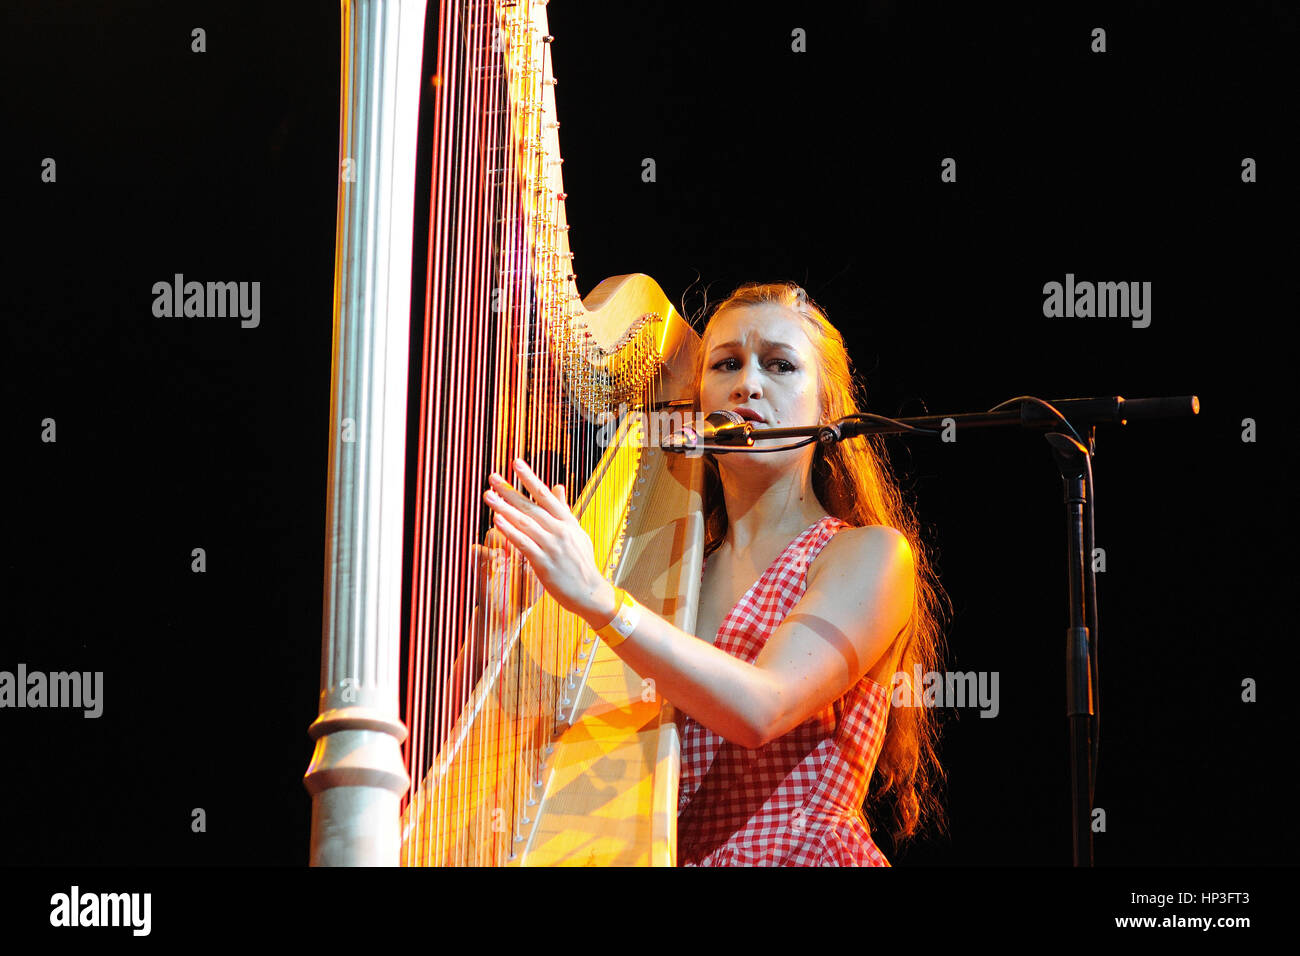 BARCELONA - JAN 20: Joanna Newsom, singer and harp player, performs at Palau de la Musica on January 20, 2011 in Barcelona, Spain. Stock Photo